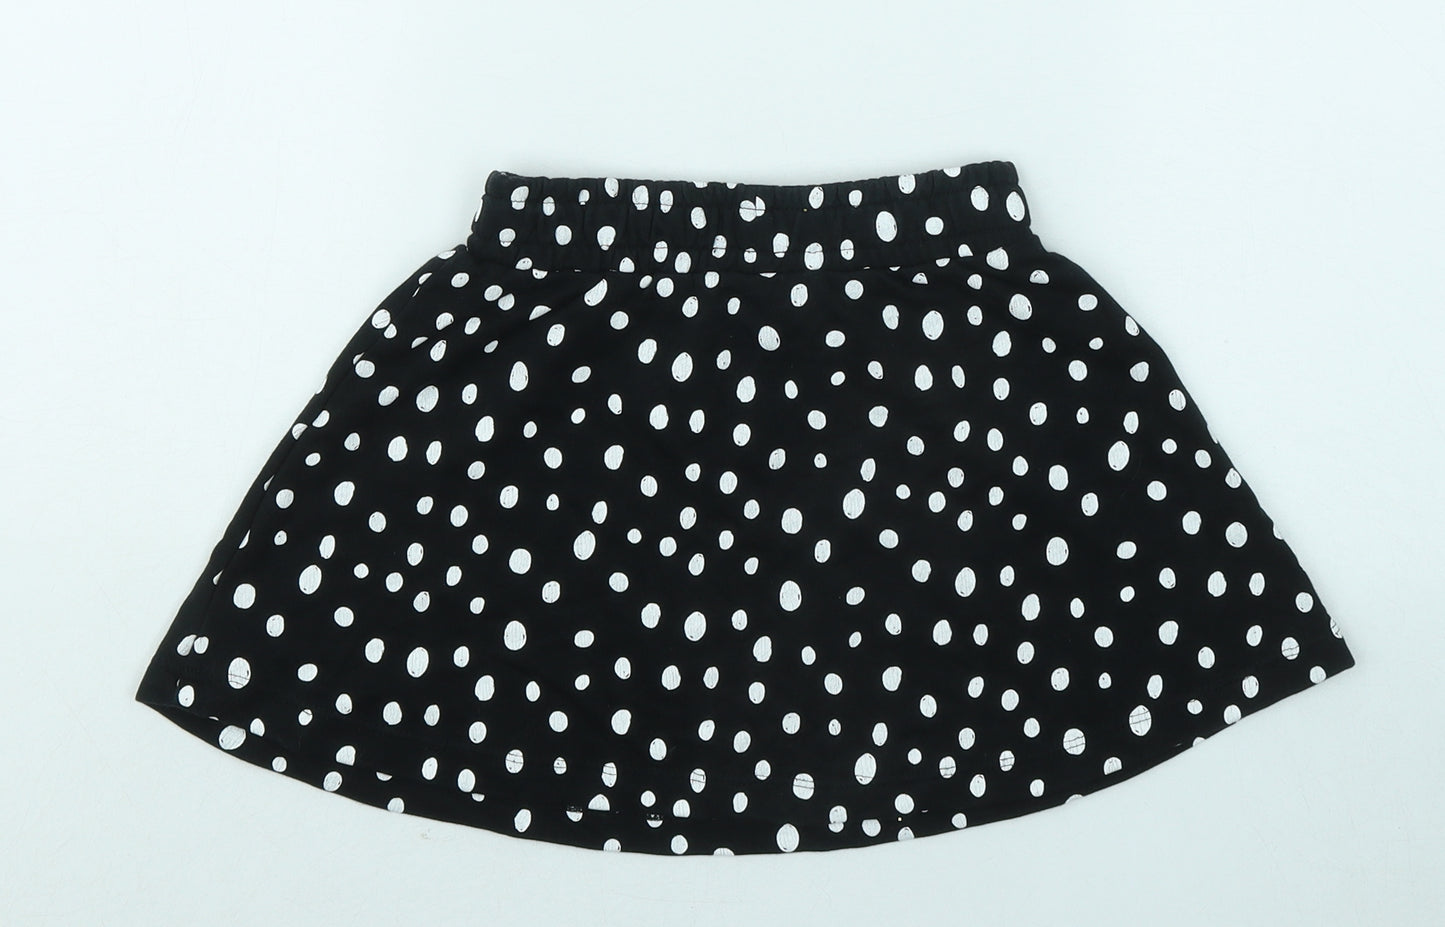 George Girls Black Polka Dot Cotton Skater Skirt Size 6-7 Years Regular Drawstring